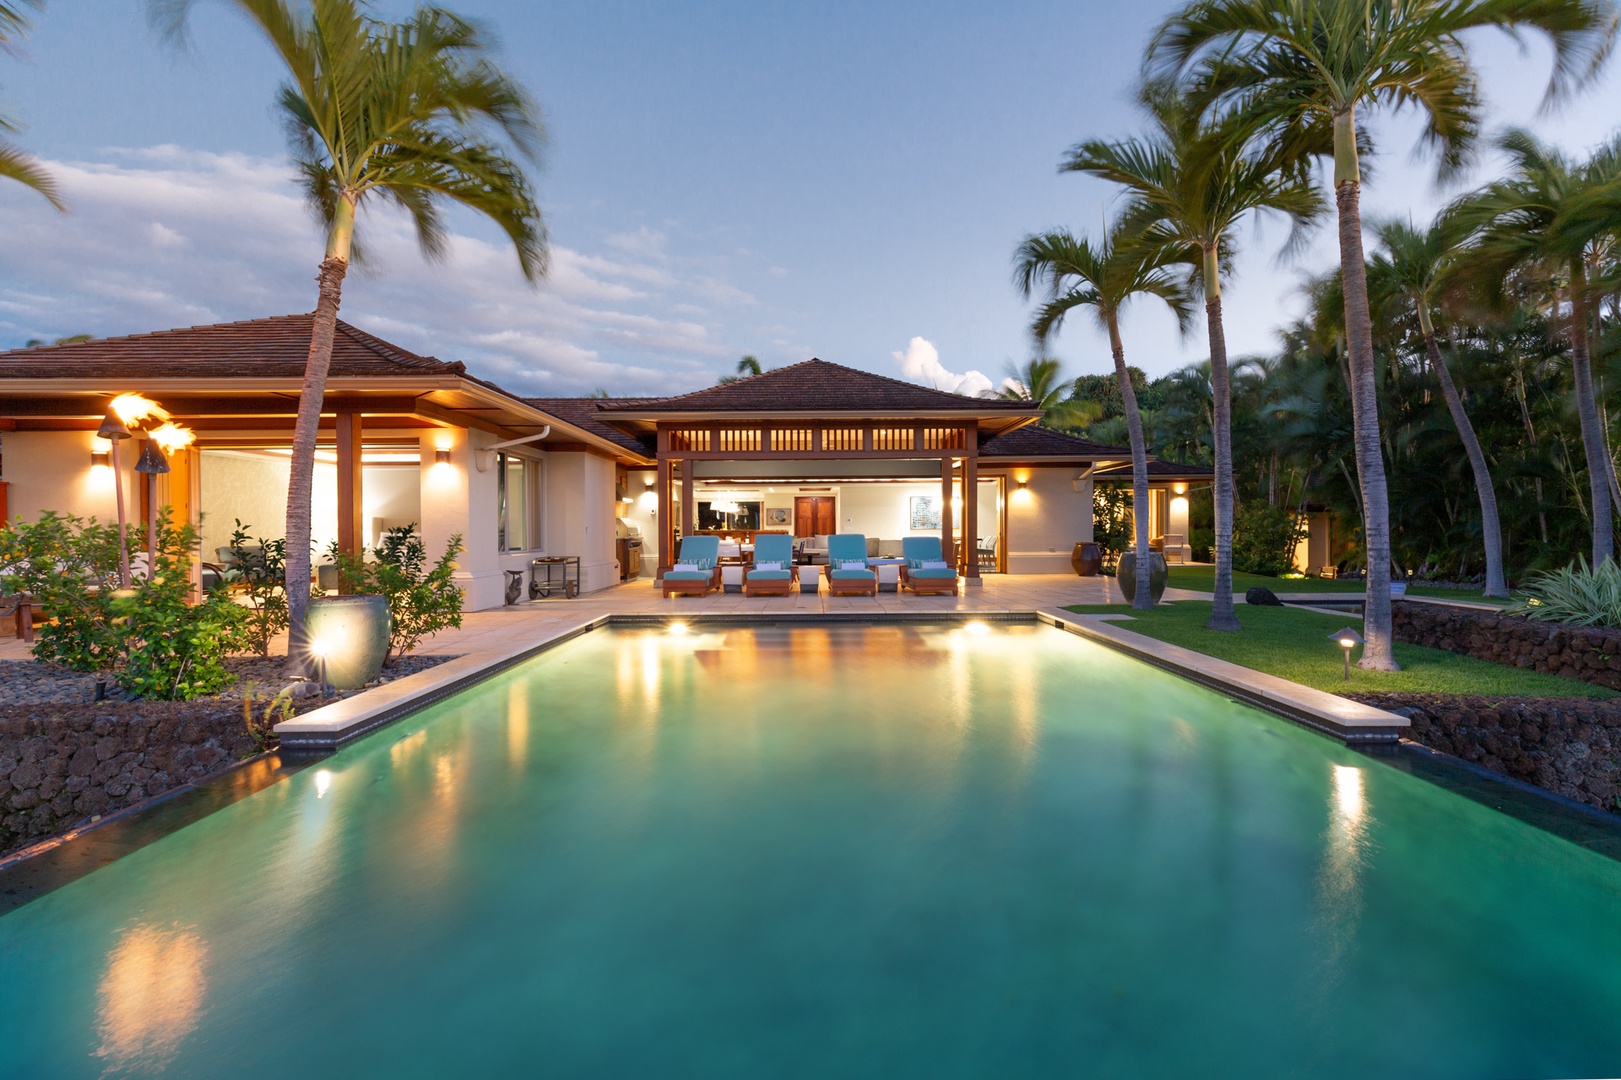 Kailua Kona Vacation Rentals, 4BD Hainoa Estate (102) at Four Seasons Resort at Hualalai - An exquisite oasis